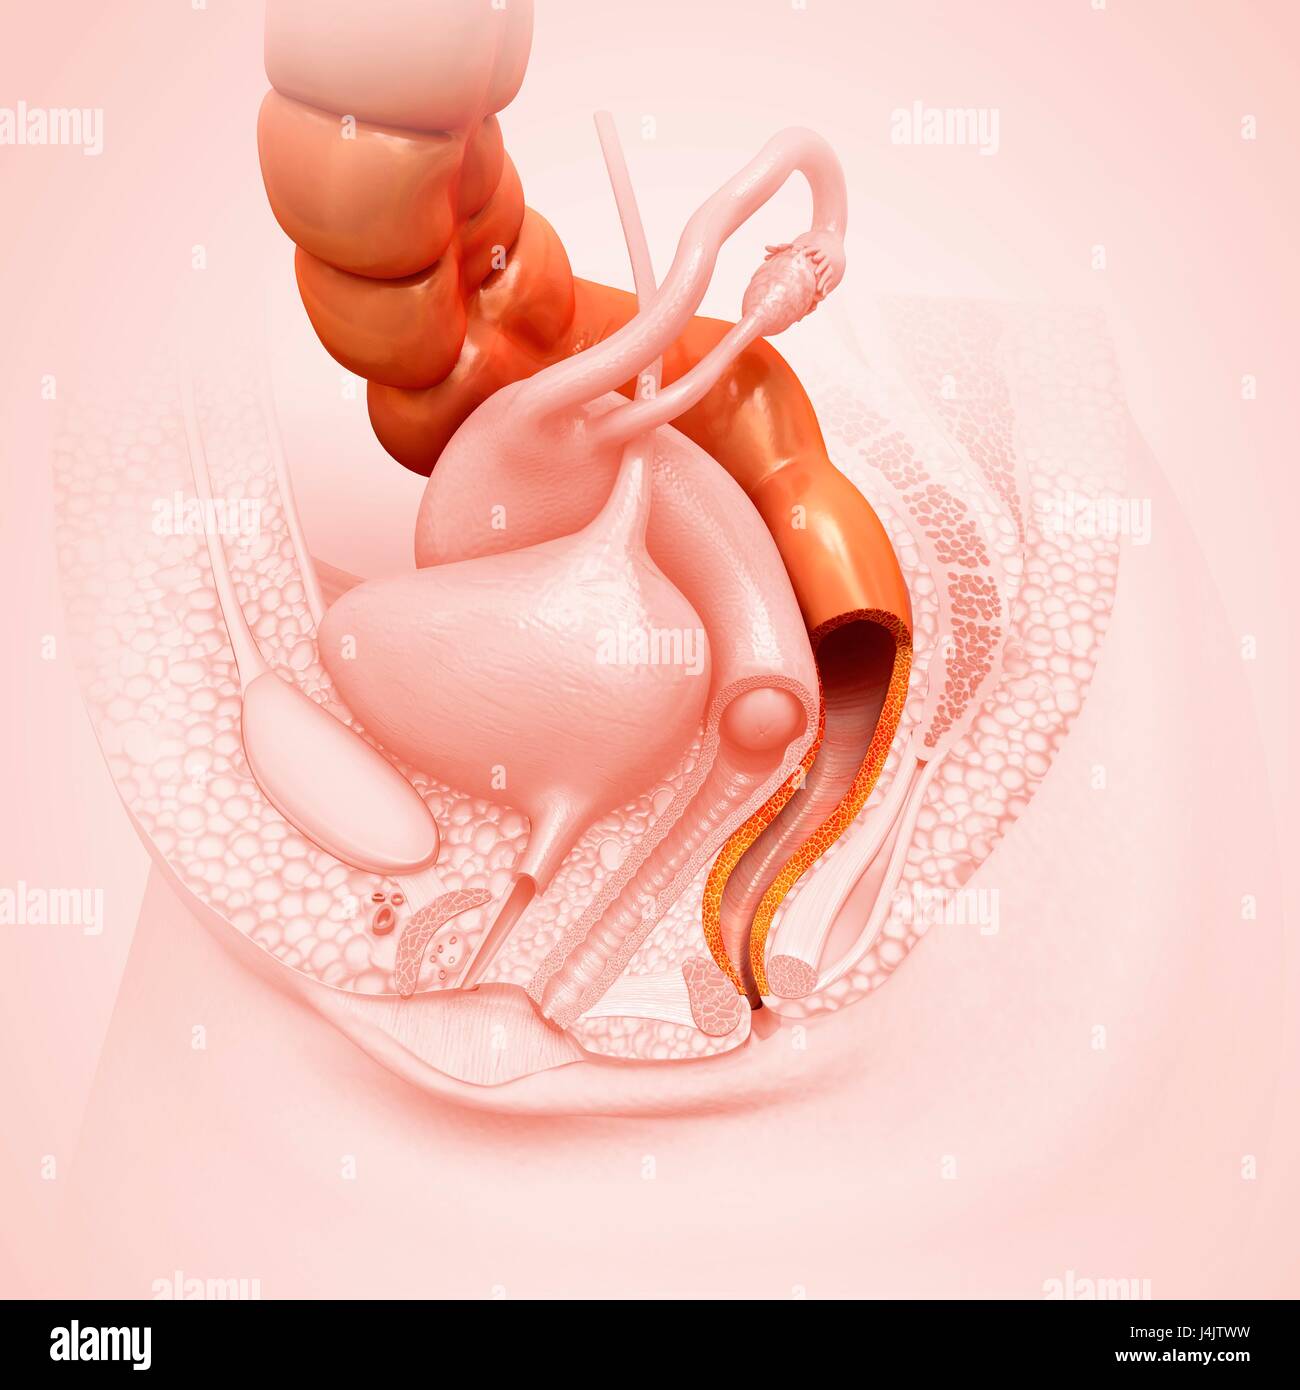 Illustration of female rectum. Stock Photo